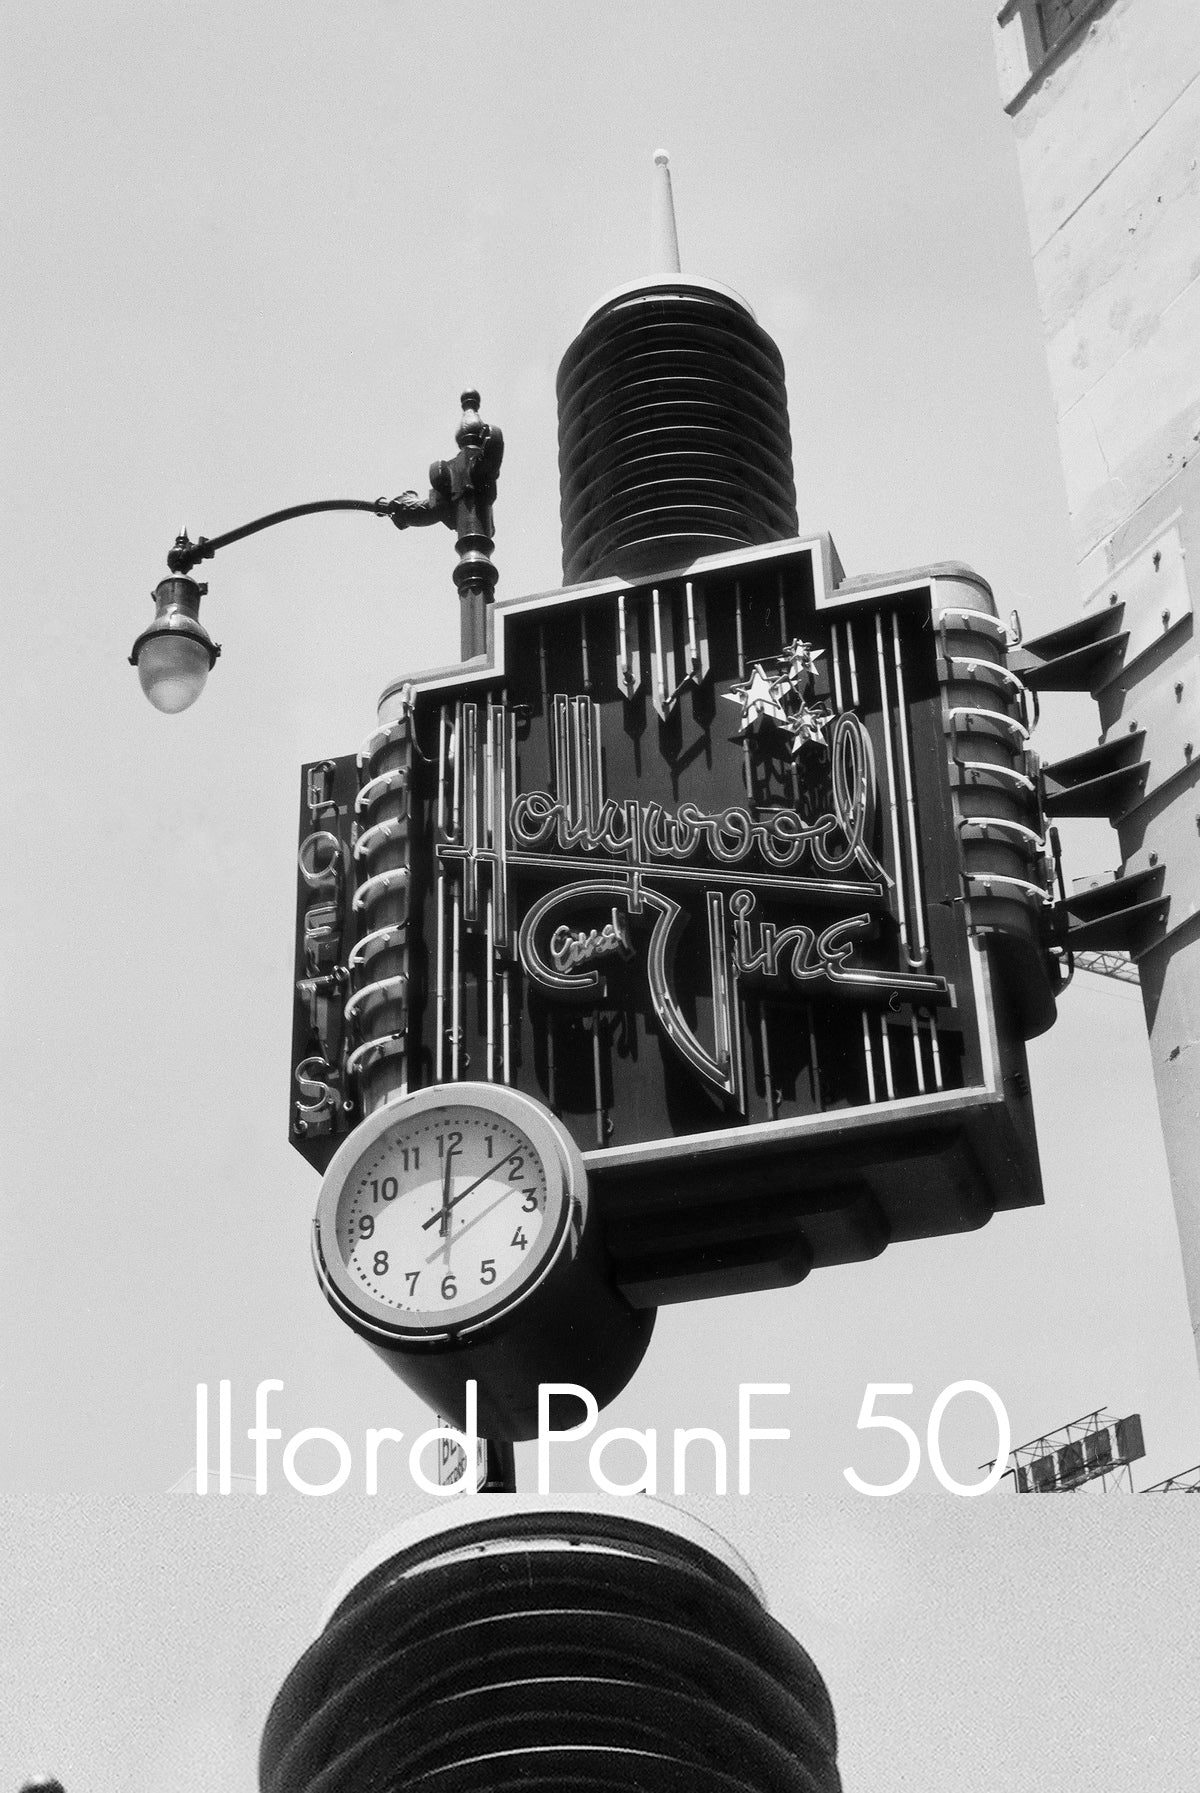 Ilford Film Processing Chart